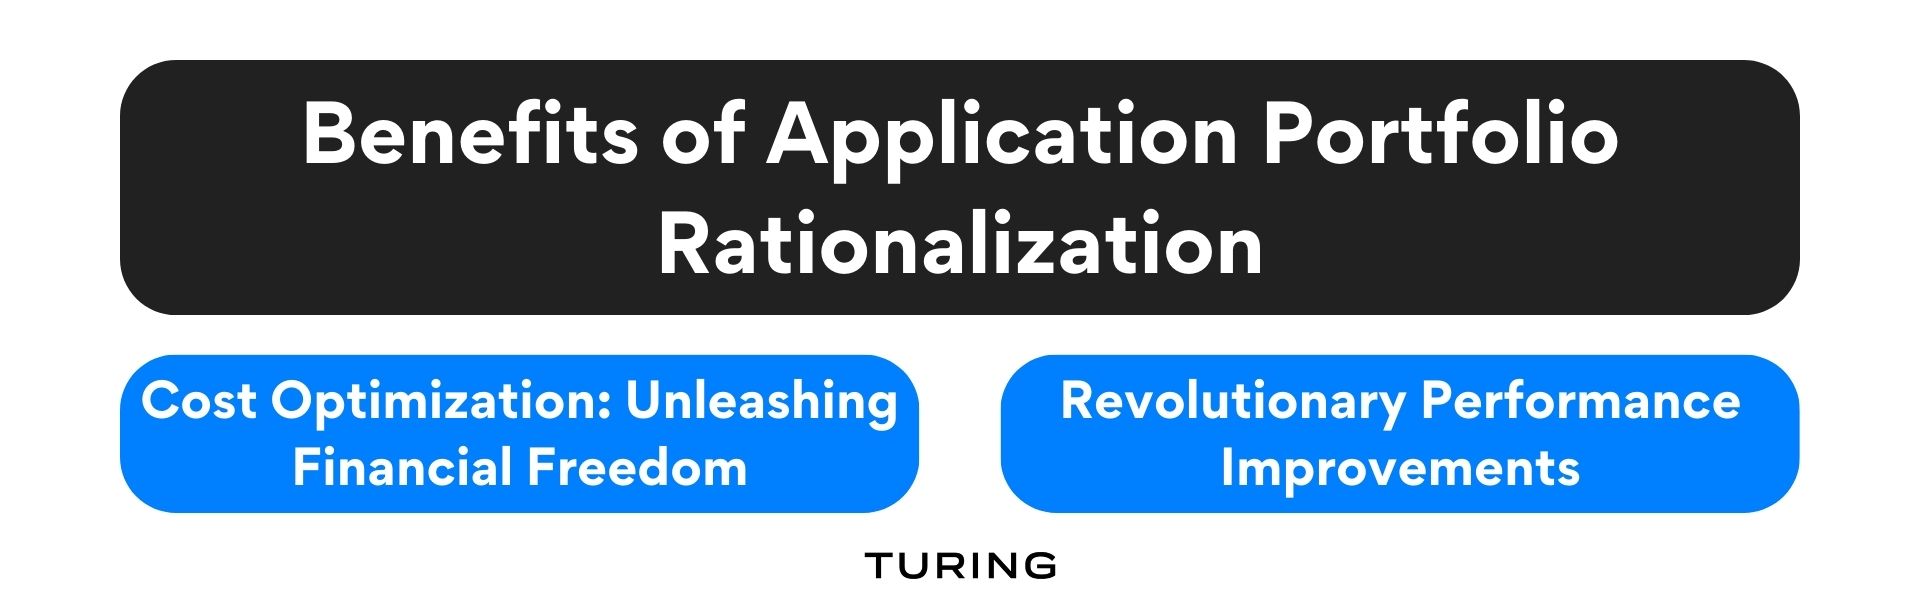 Benefits of Application Portfolio Rationalization